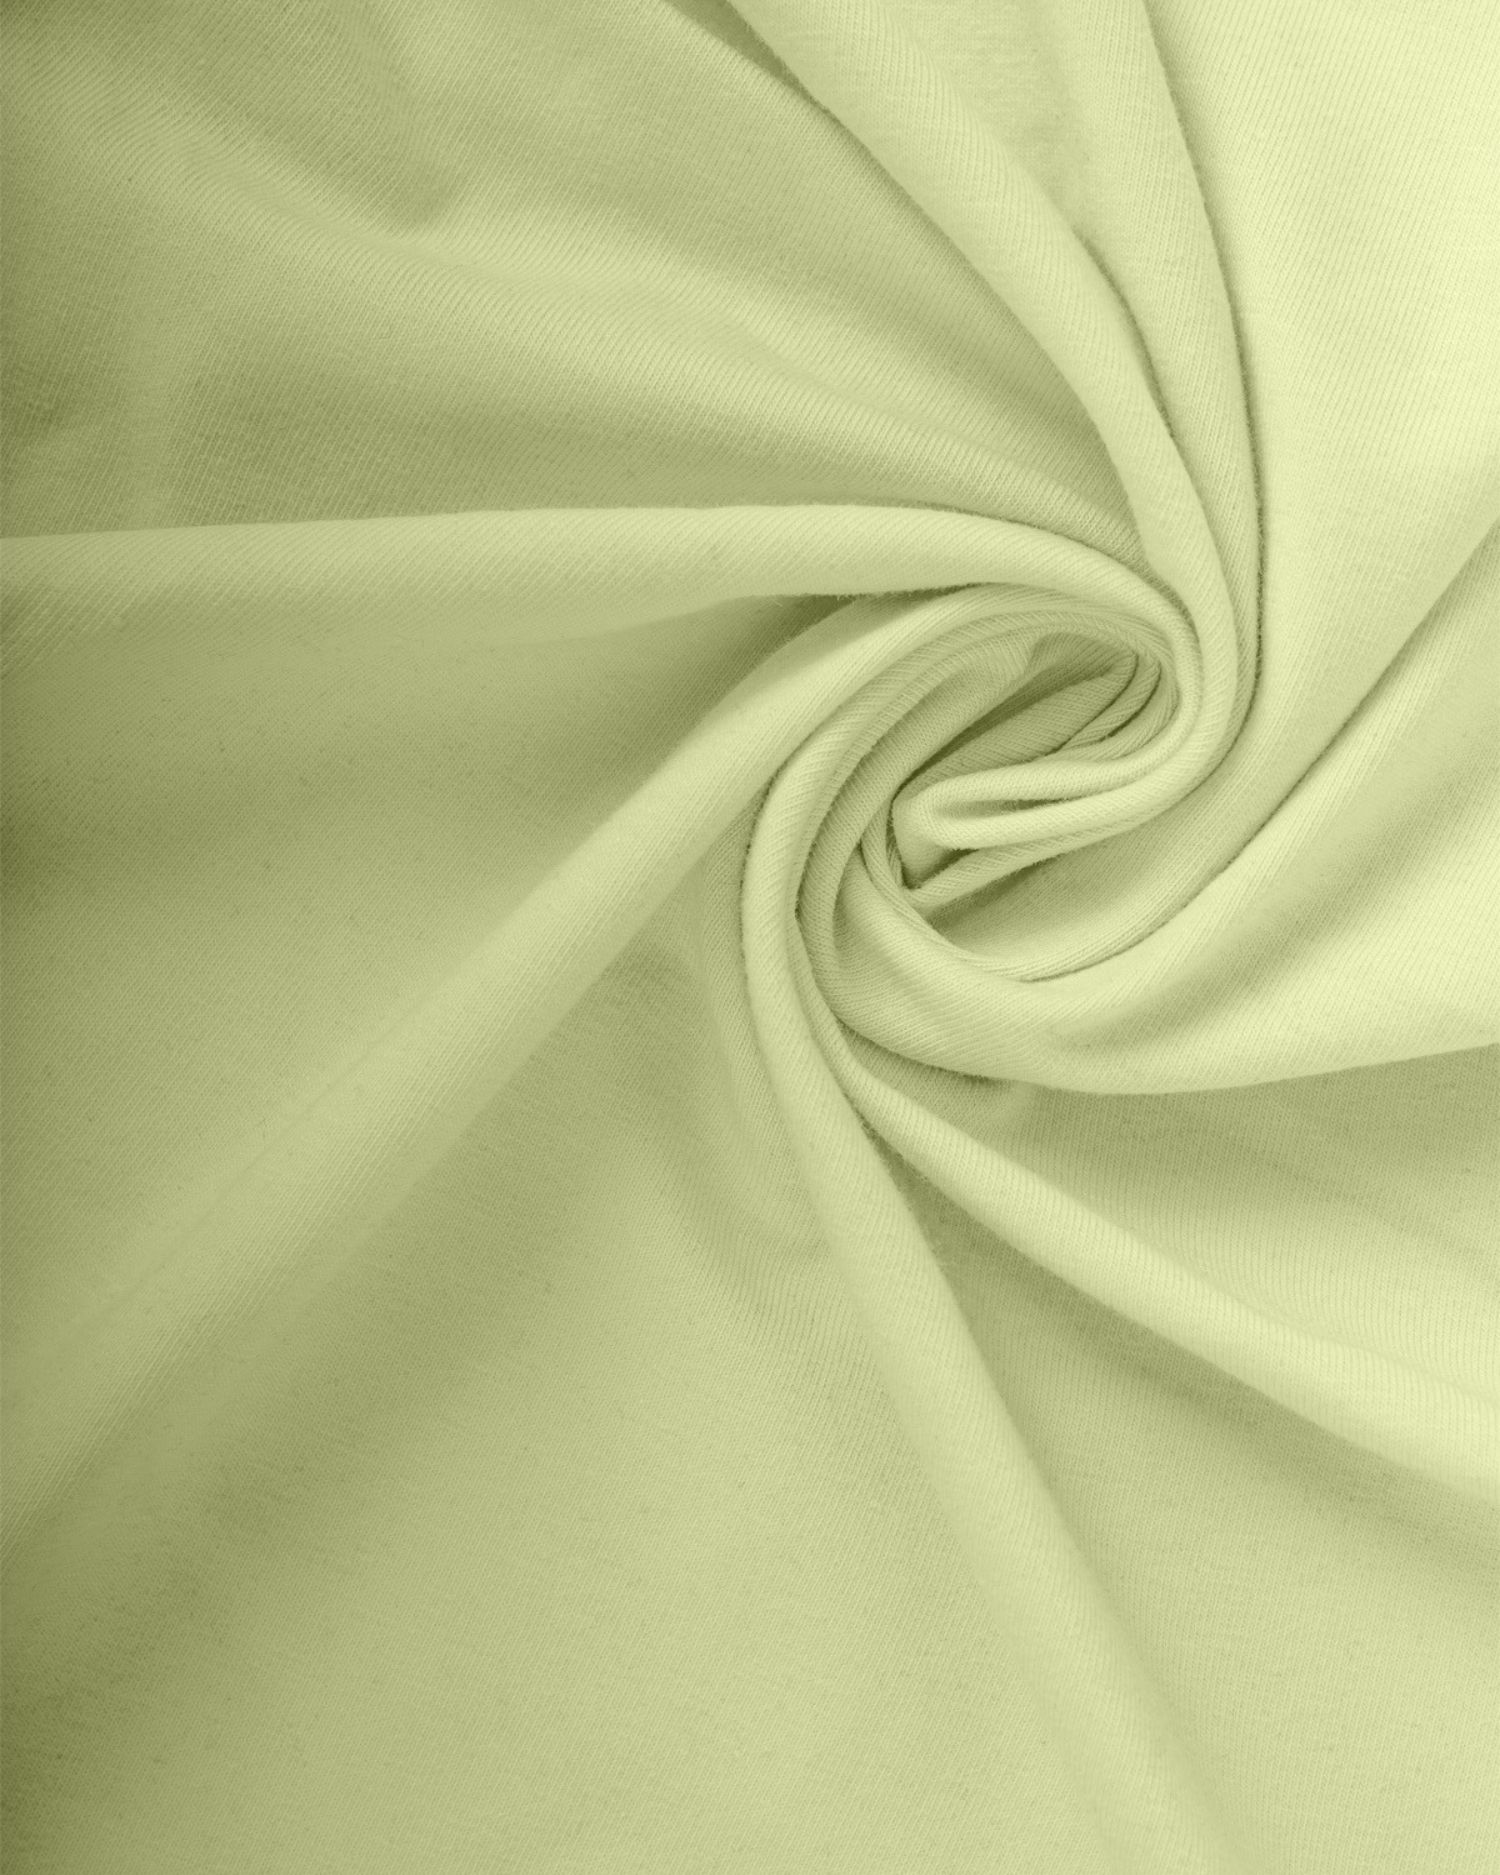 Cotton single Jersey with elastane, 1 meter, 185gr/m2, light green